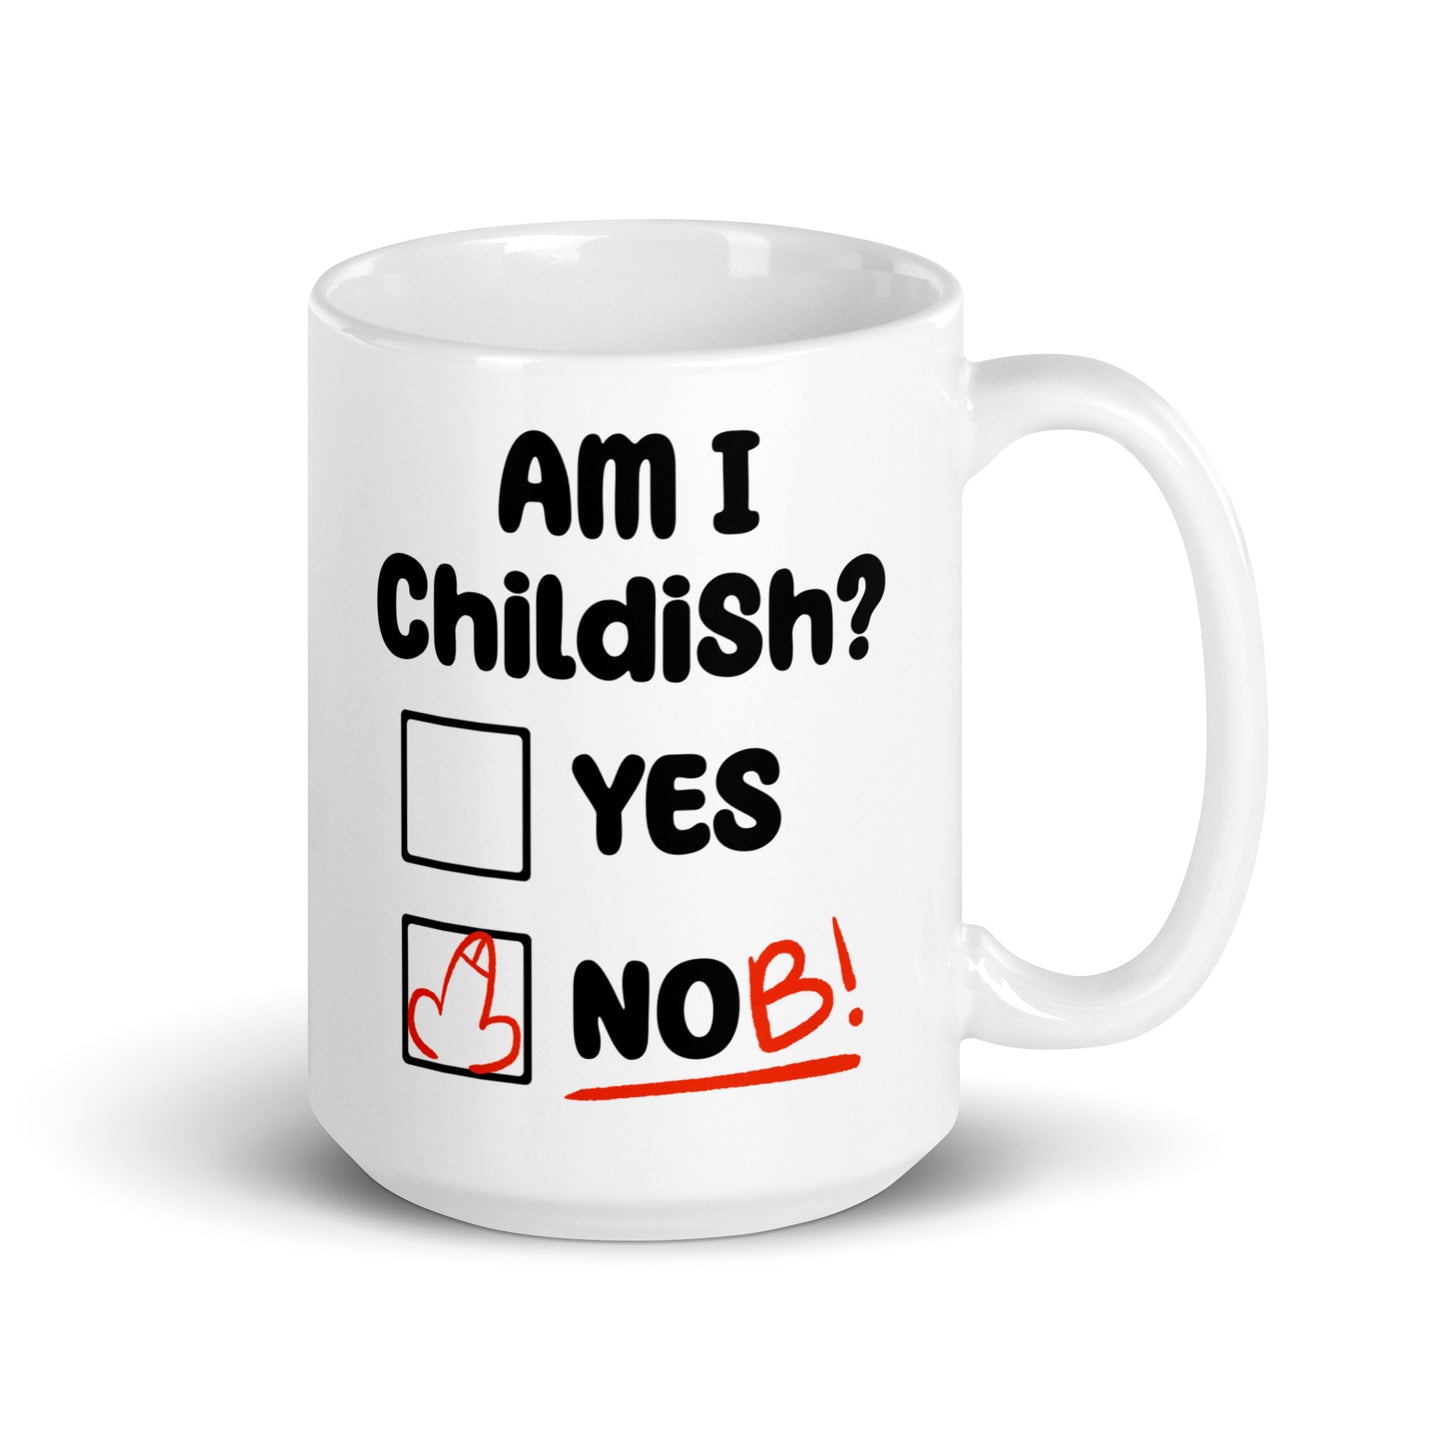 "Am I Childish?" Mug